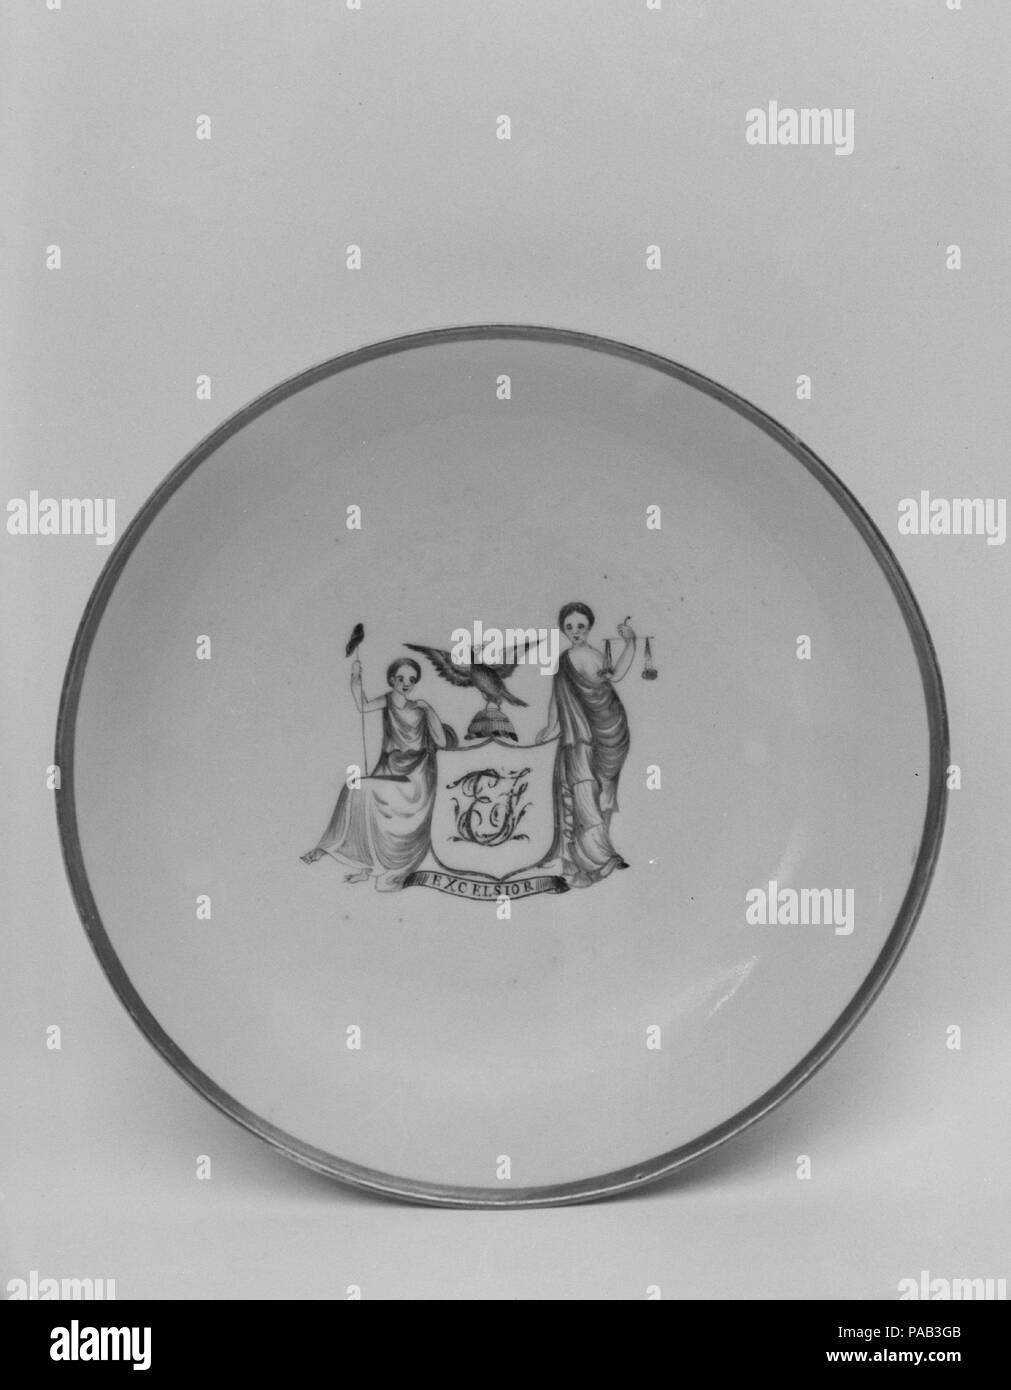 Soucoupe volante. Culture : le chinois. Dimensions : diam. 5 1/2 in. (14 cm). Date : ca. 1820. Musée : Metropolitan Museum of Art, New York, USA. Banque D'Images